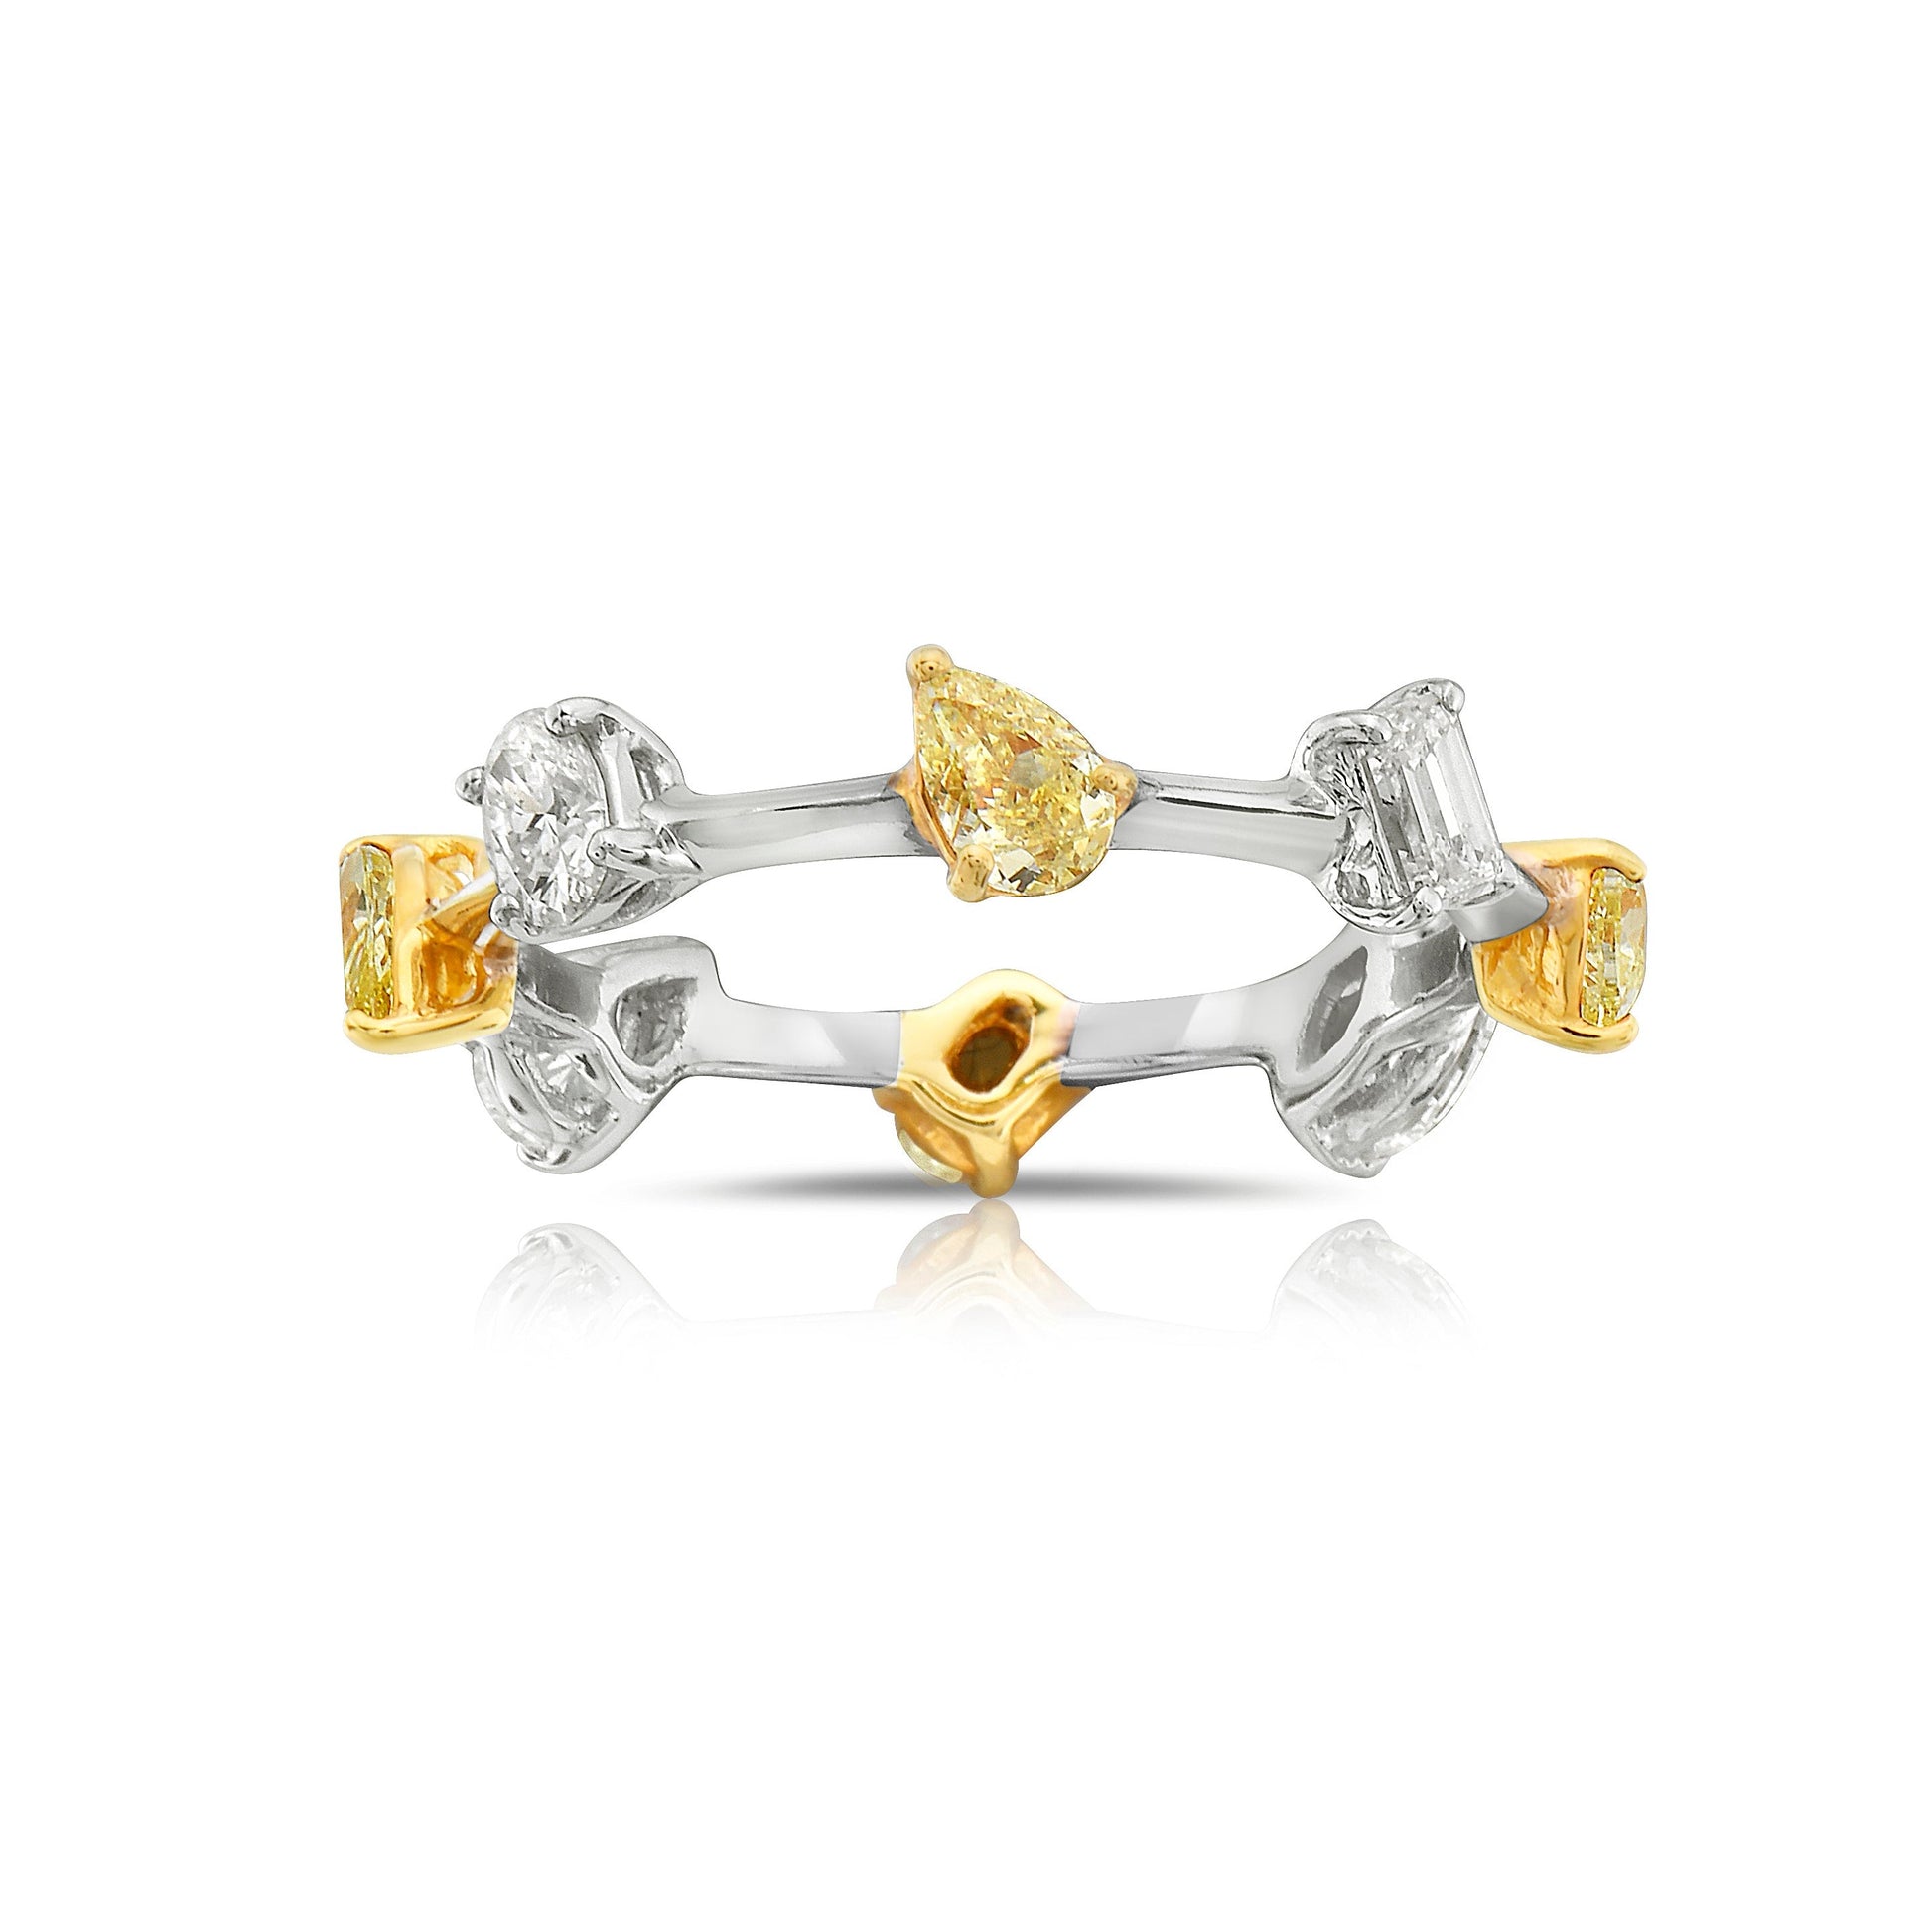 Alternating Fancy Yellow and White Diamond Eternity Band. Yellow diamond jewelry 